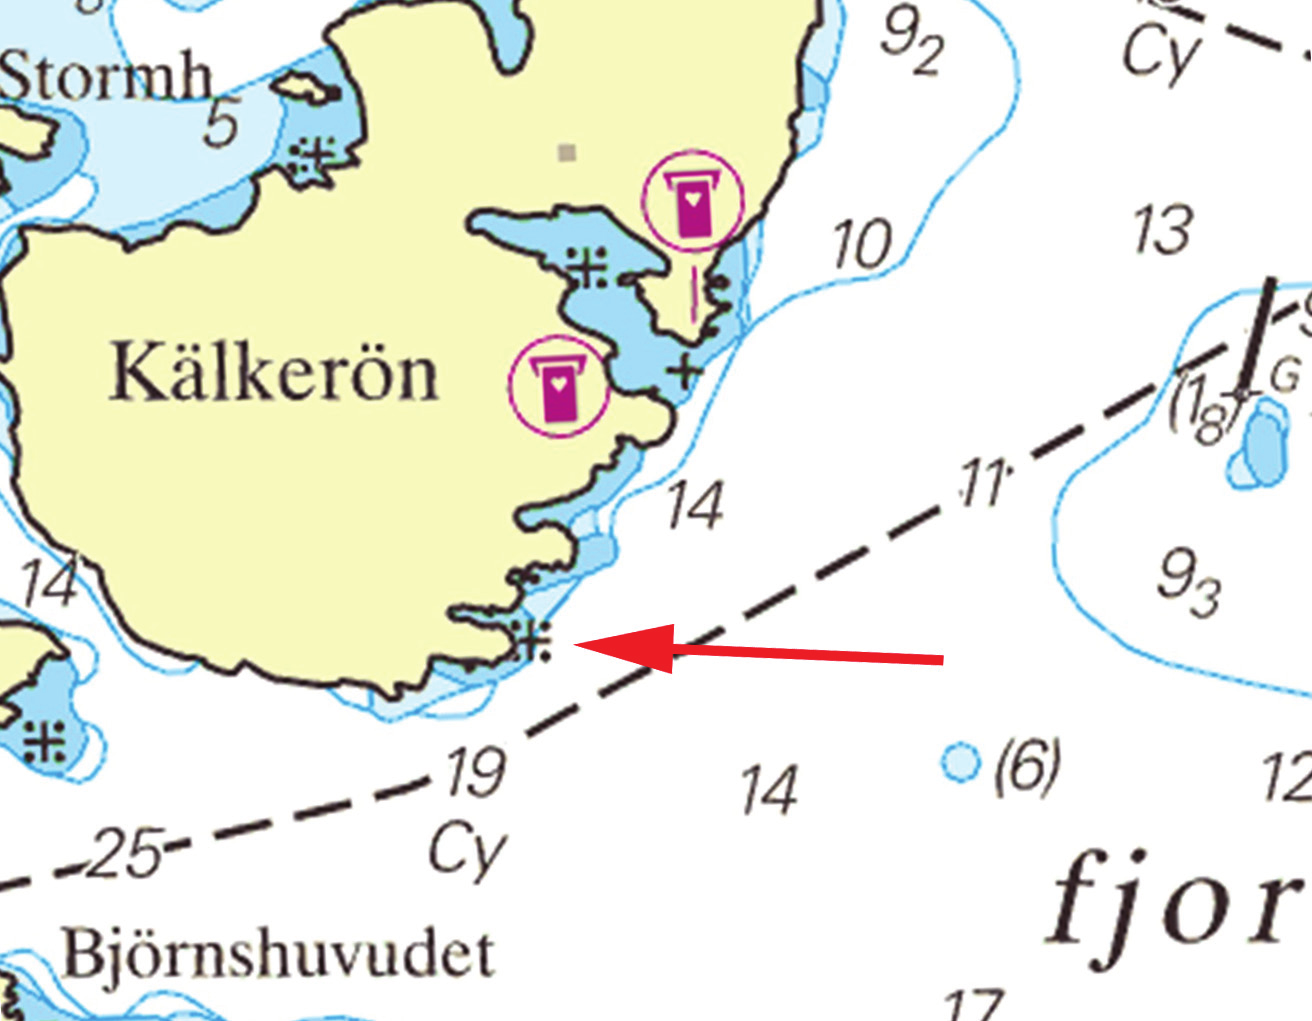 16 Sweden. Kattegat. Göteborg. Rya hamnen. Leading lights withdrawn. The red leading line at Ryahamnen is withdrawn.